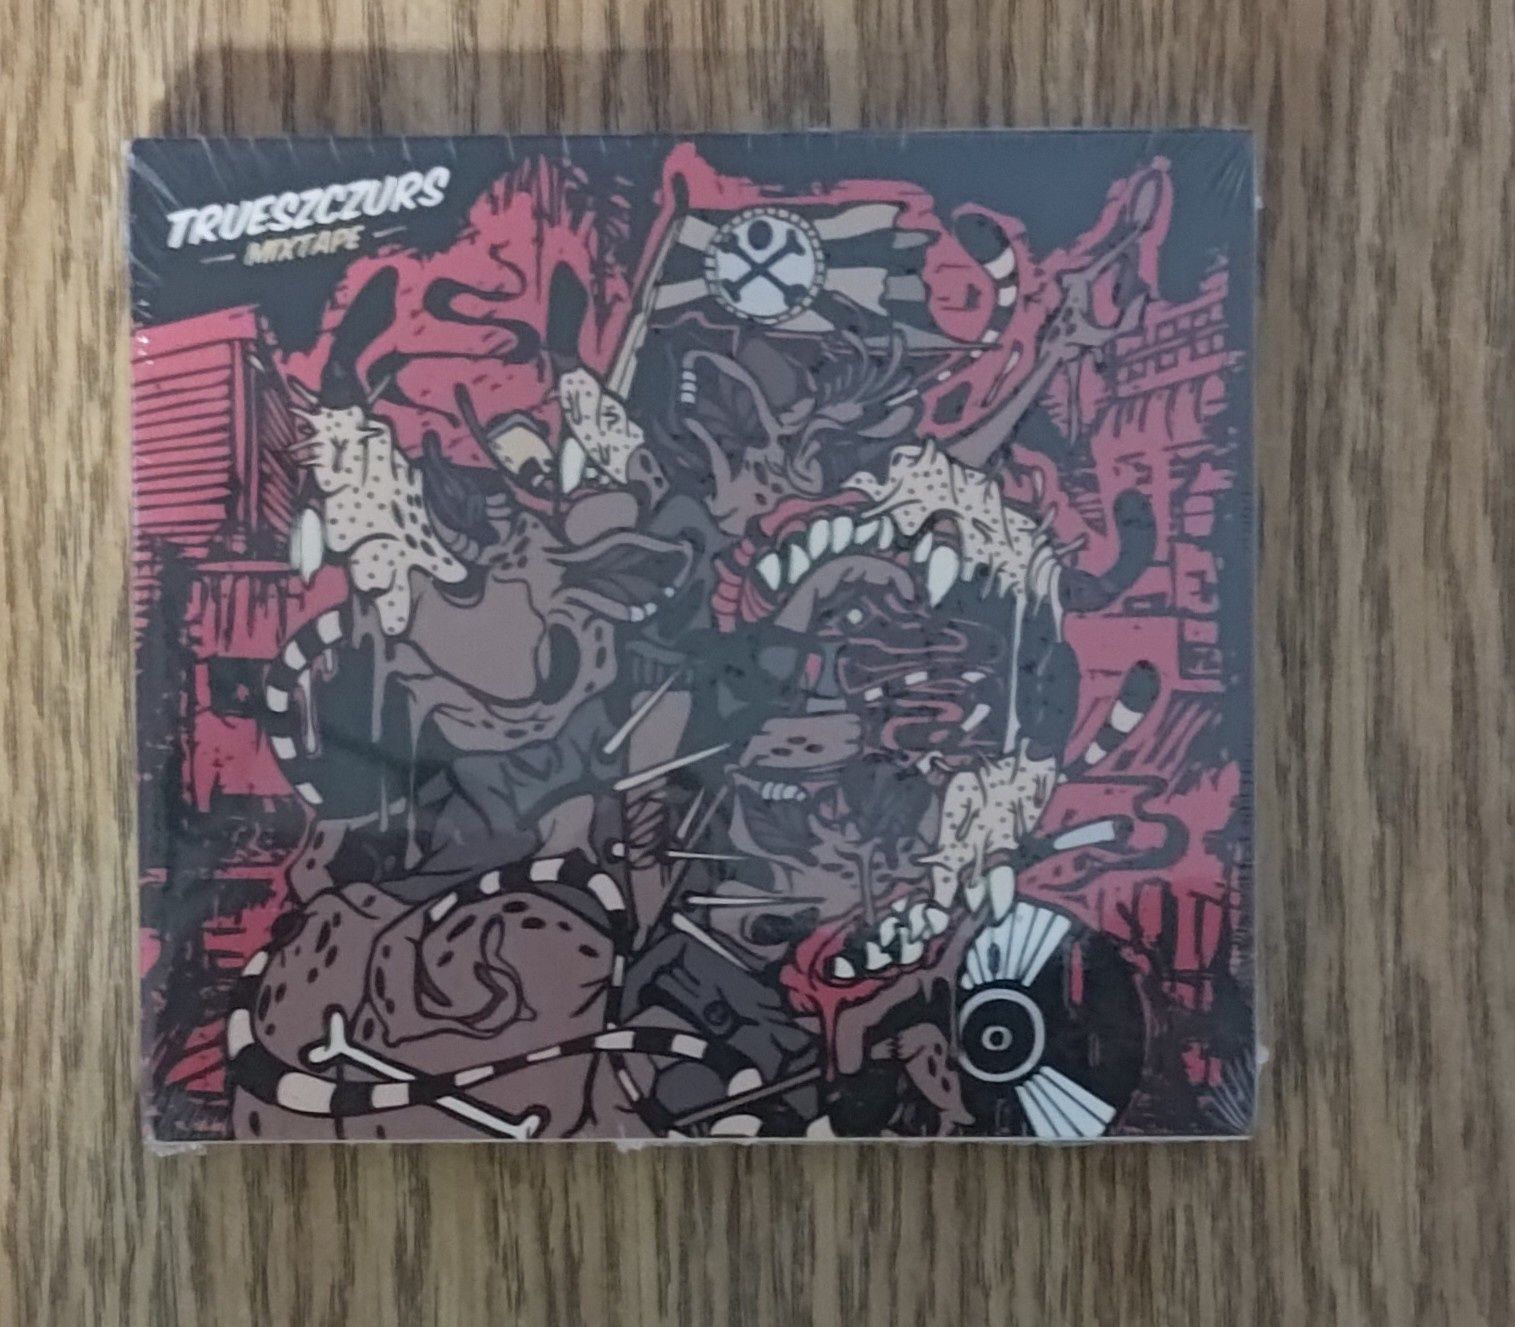 Trueszczurs - Mixtape - Blendtape - 2CD - nowa w folii - unikat